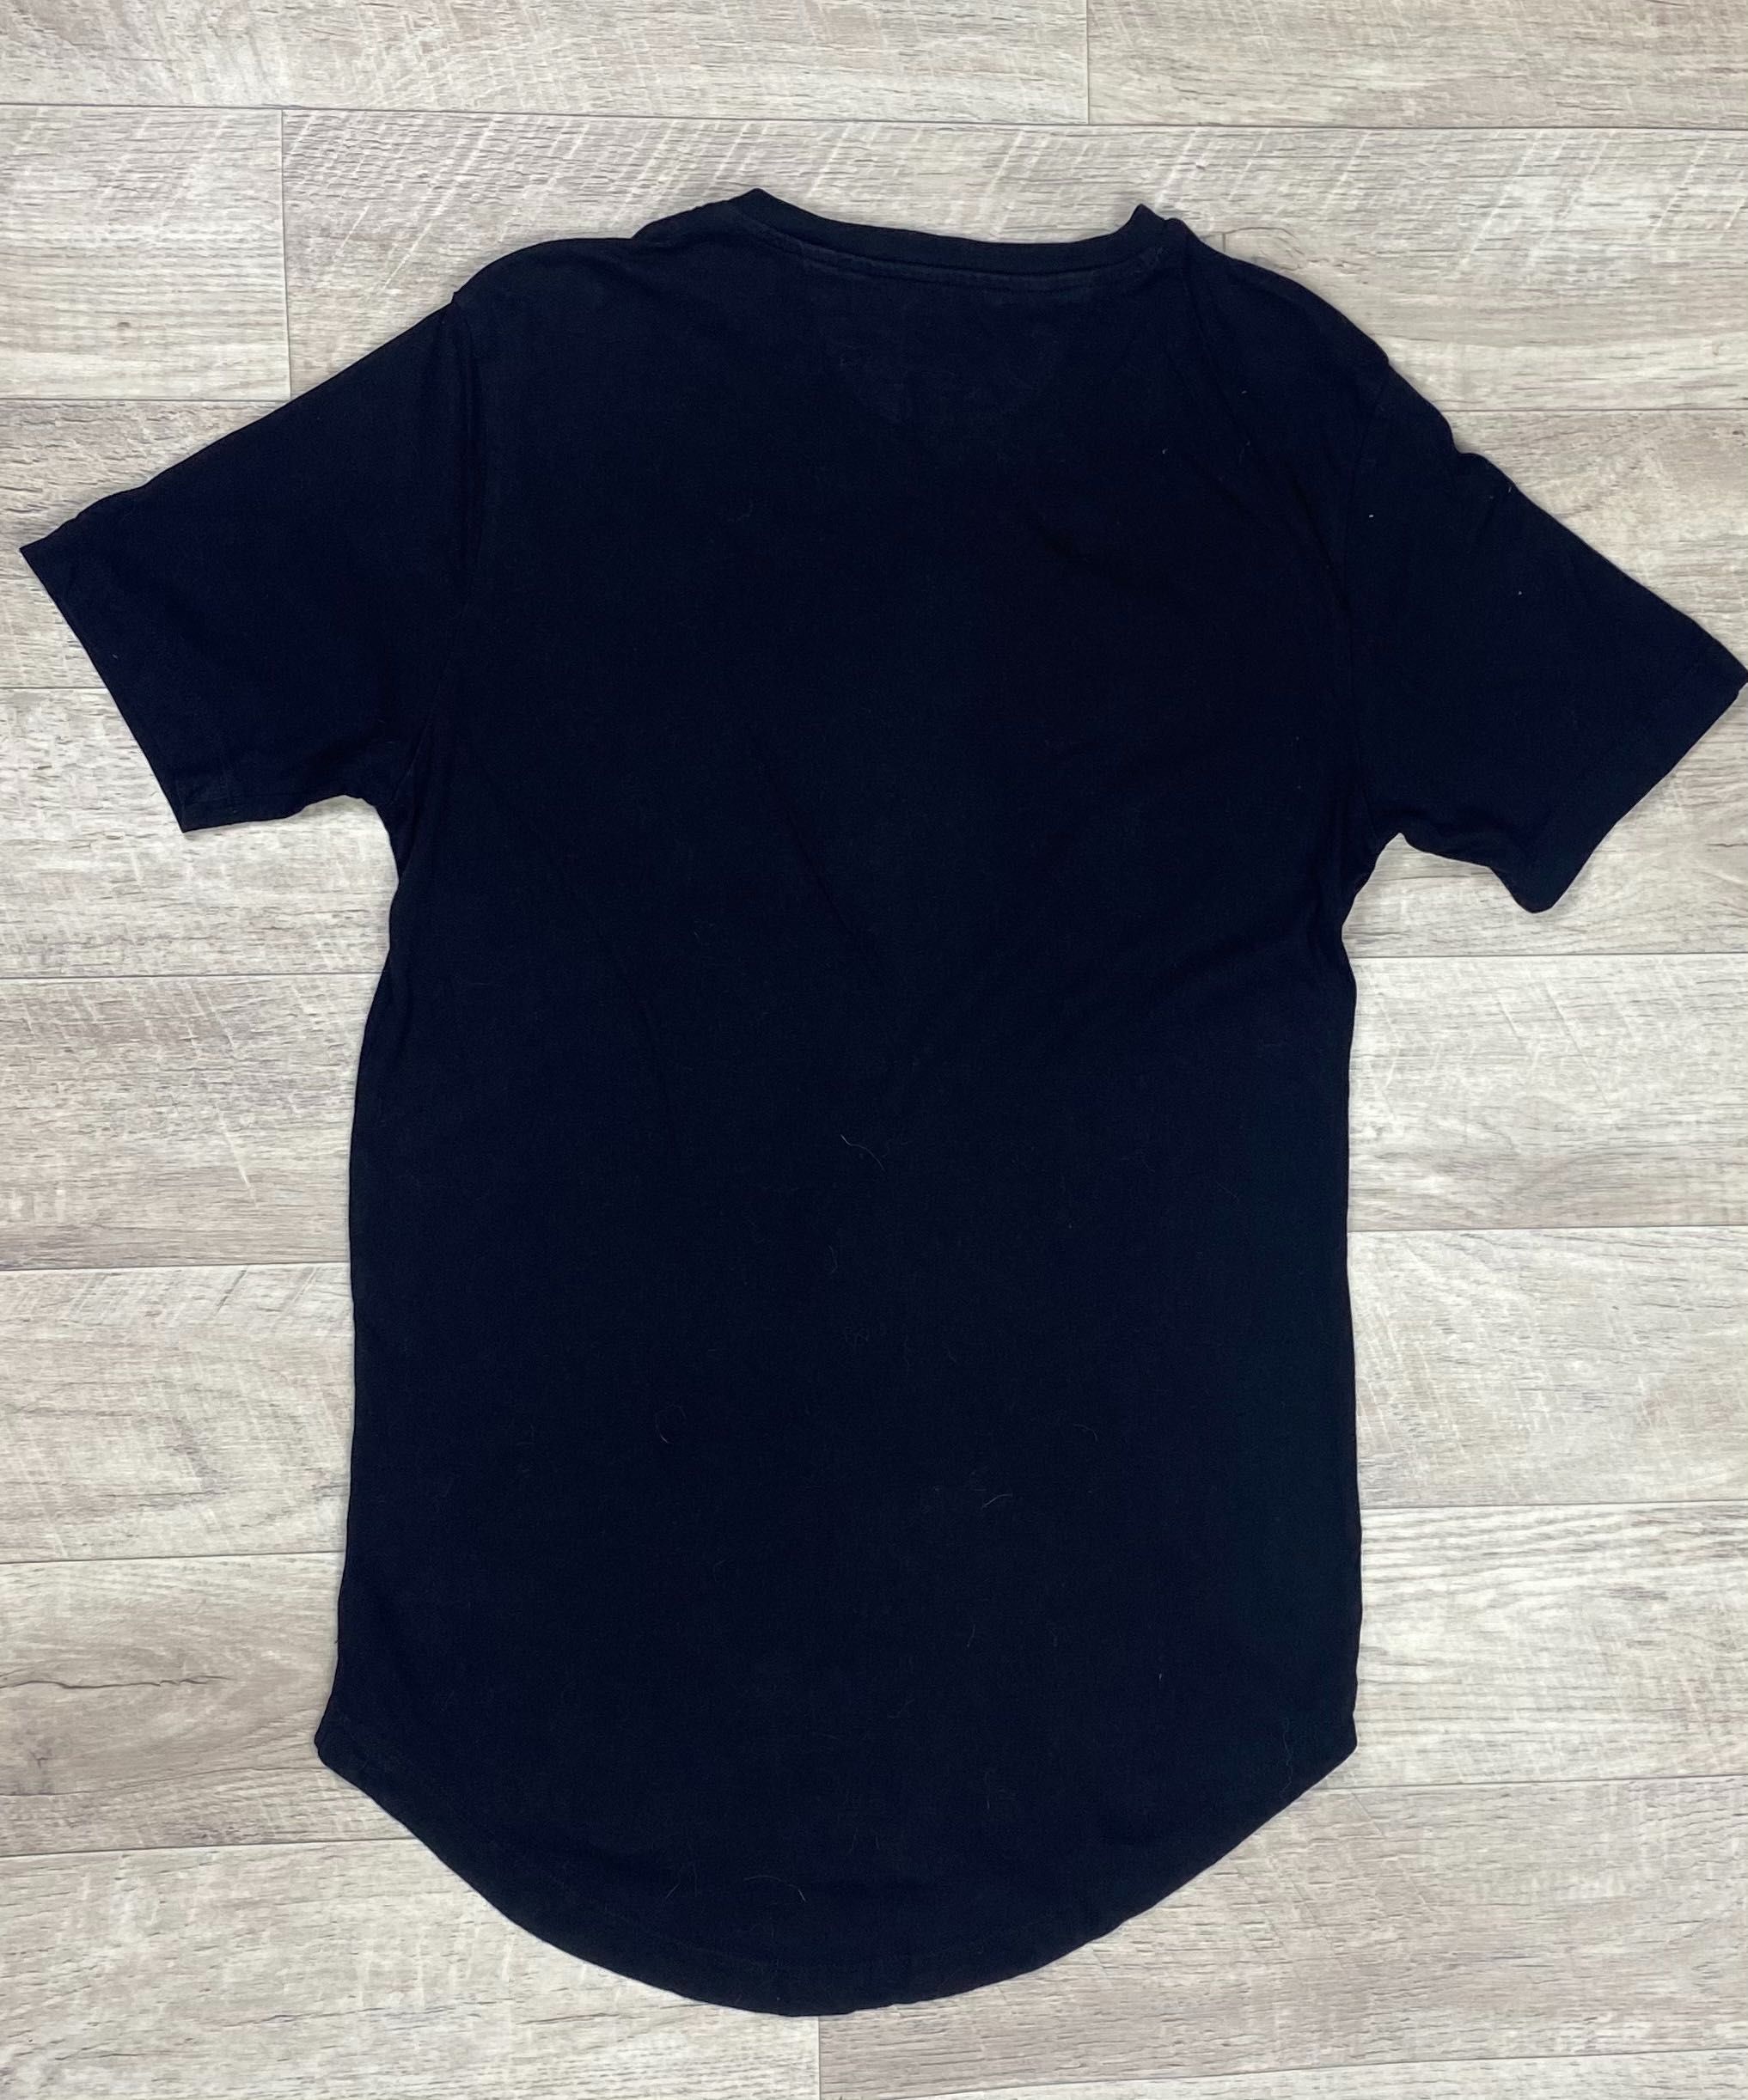 Zara long length футболка s размер черная оригинал